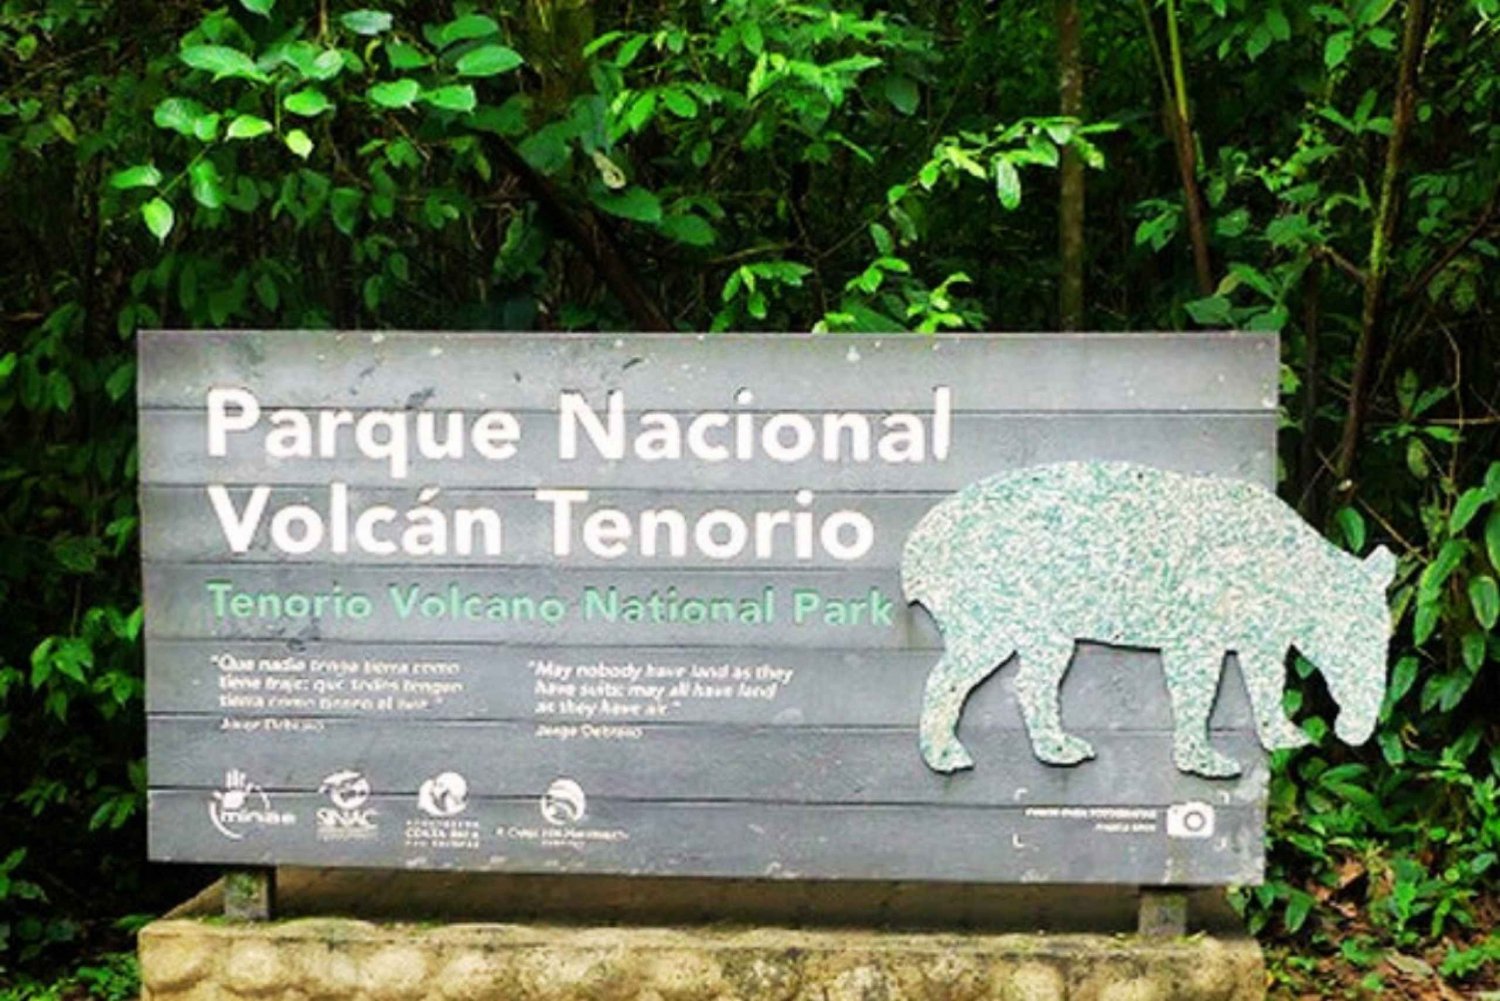 Parque Nacional de Tenorio: Tour guiado y experiencia con perezosos